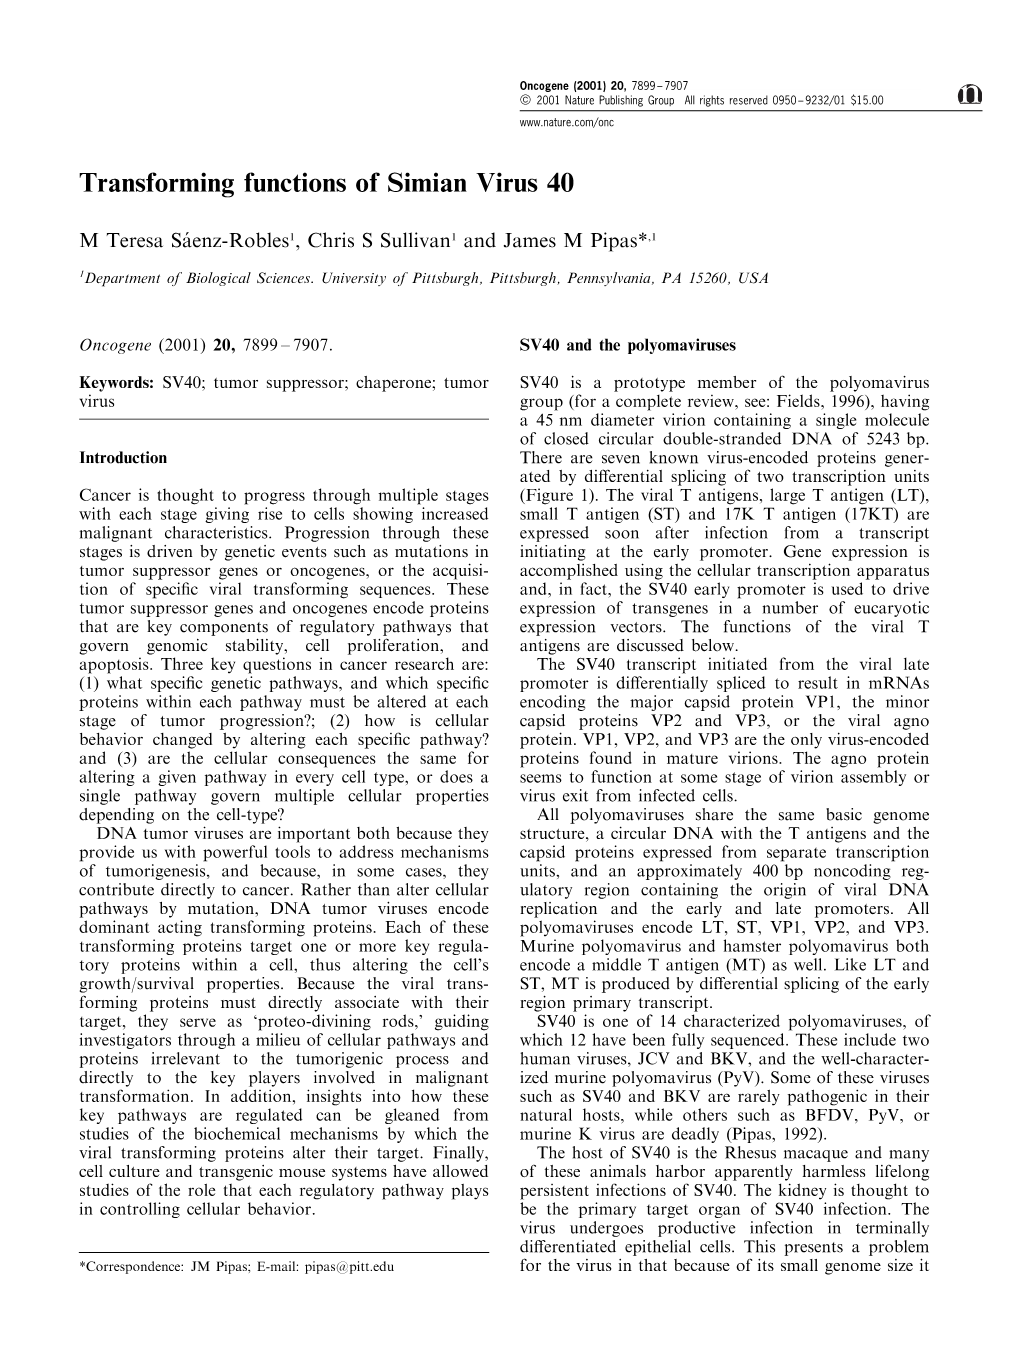 Transforming Functions of Simian Virus 40